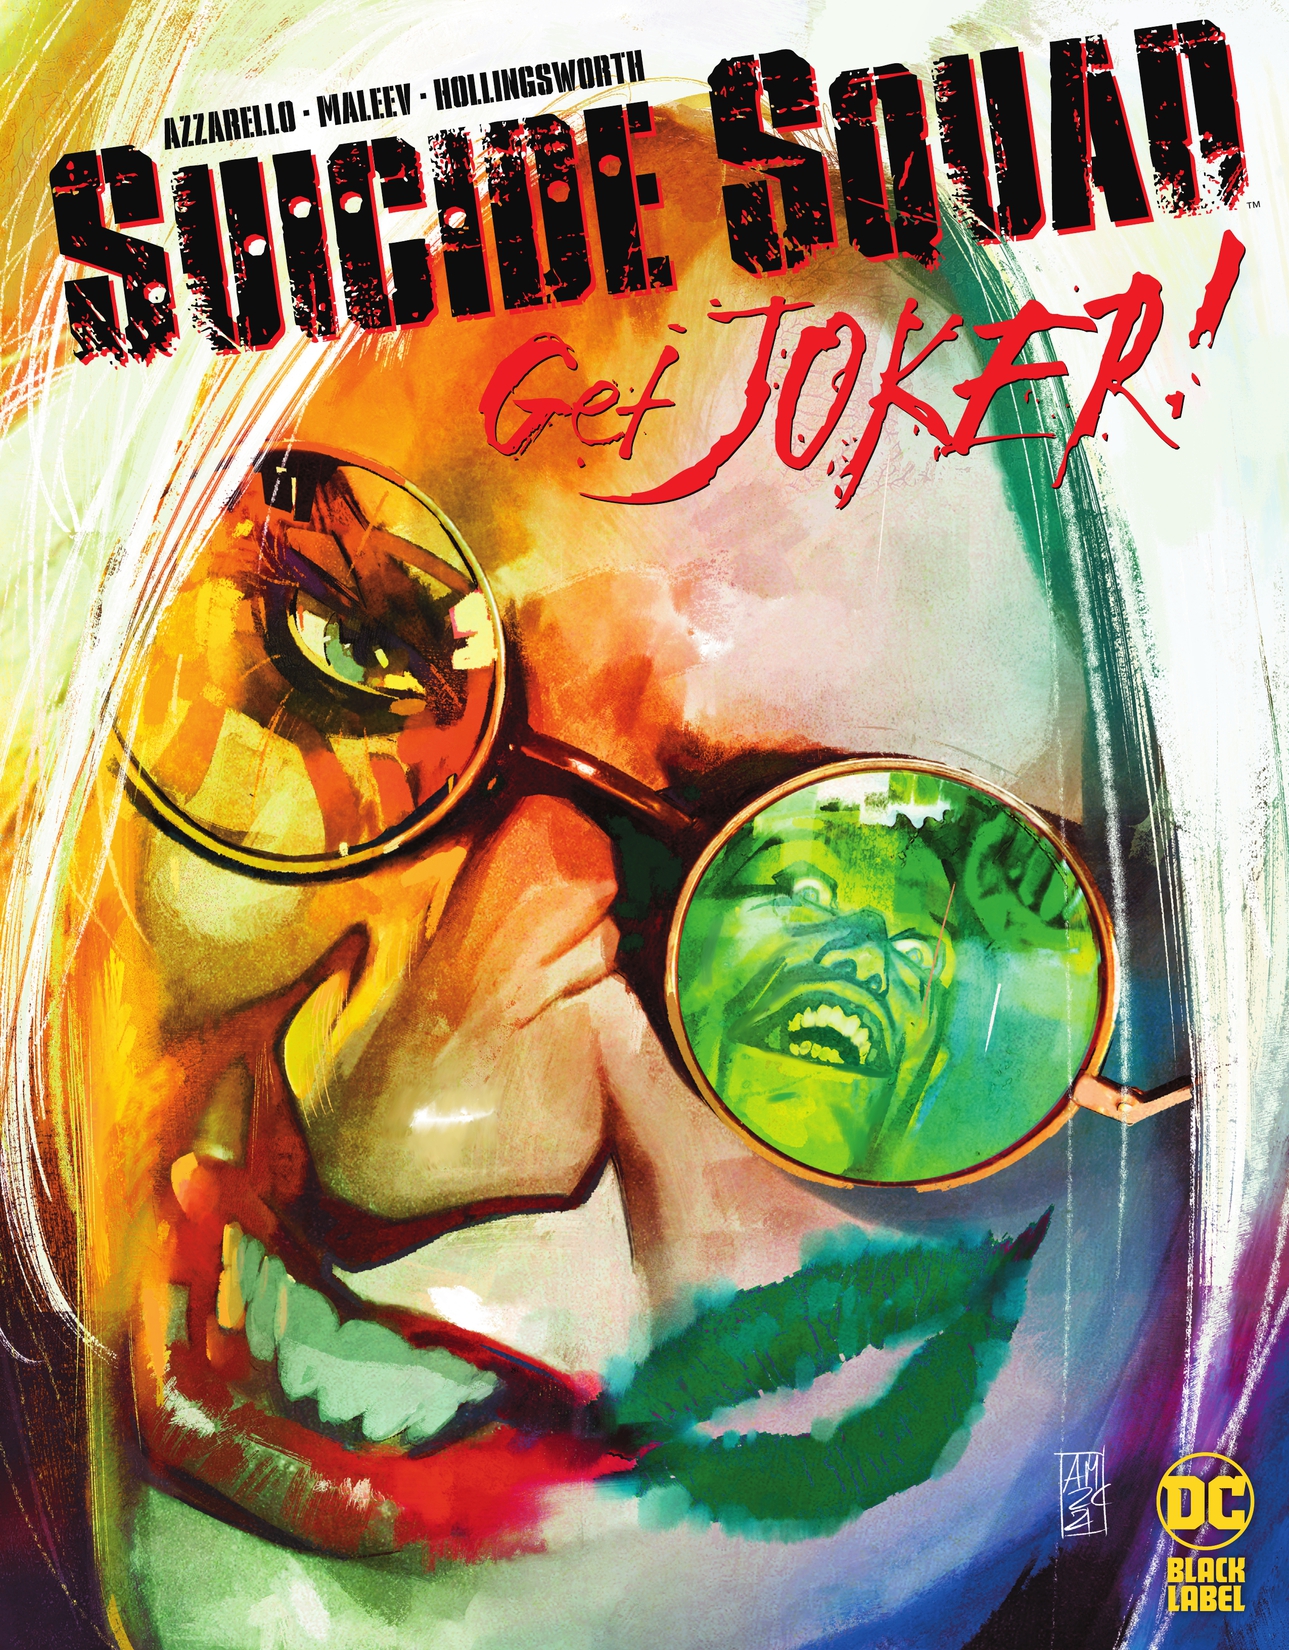 Suicide Squad: Get Joker! #2 preview images